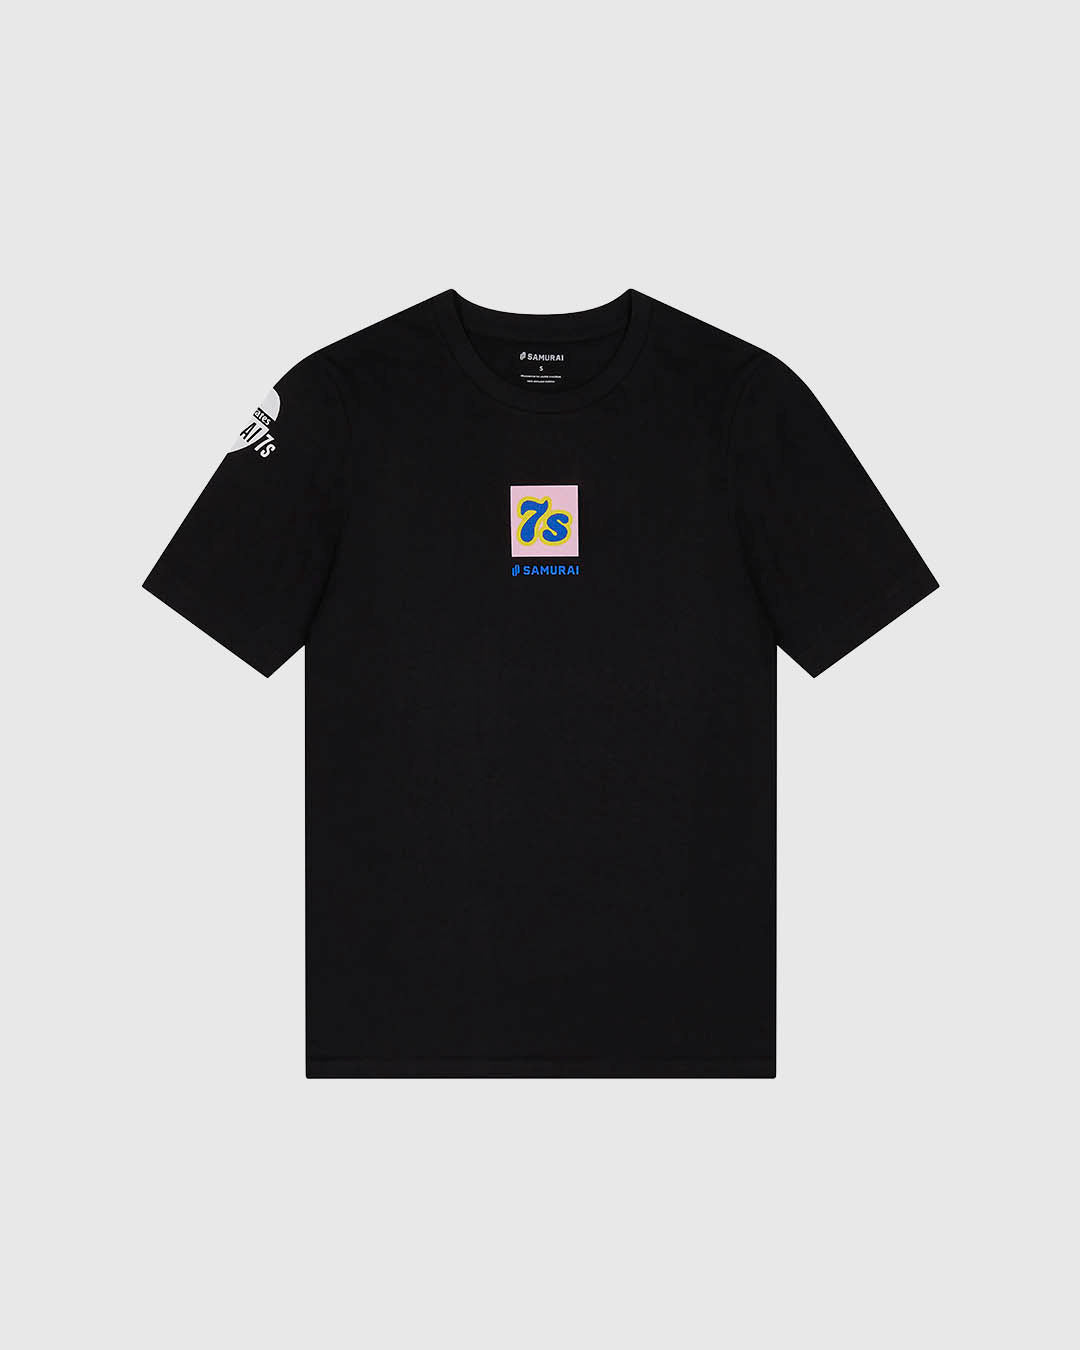 ED7:09 - Bubblegum T-Shirt - Black